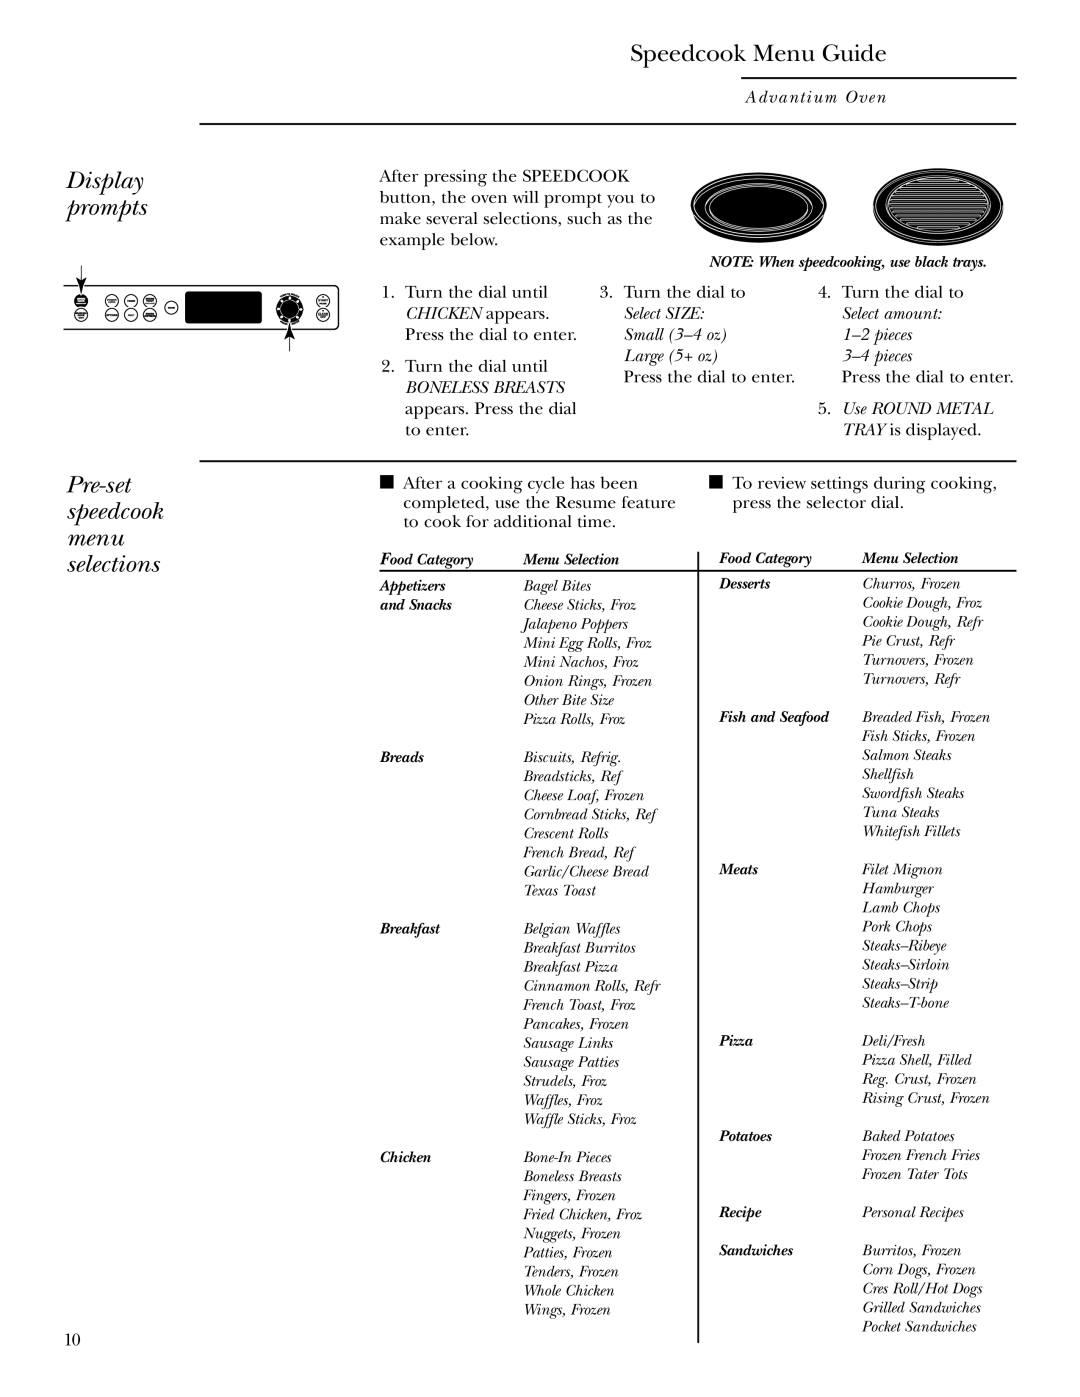 Anchor Hocking Glass ZSC2001 Display prompts, Speedcook Menu Guide, Pre-set speedcook menu selections, Advantium Oven 